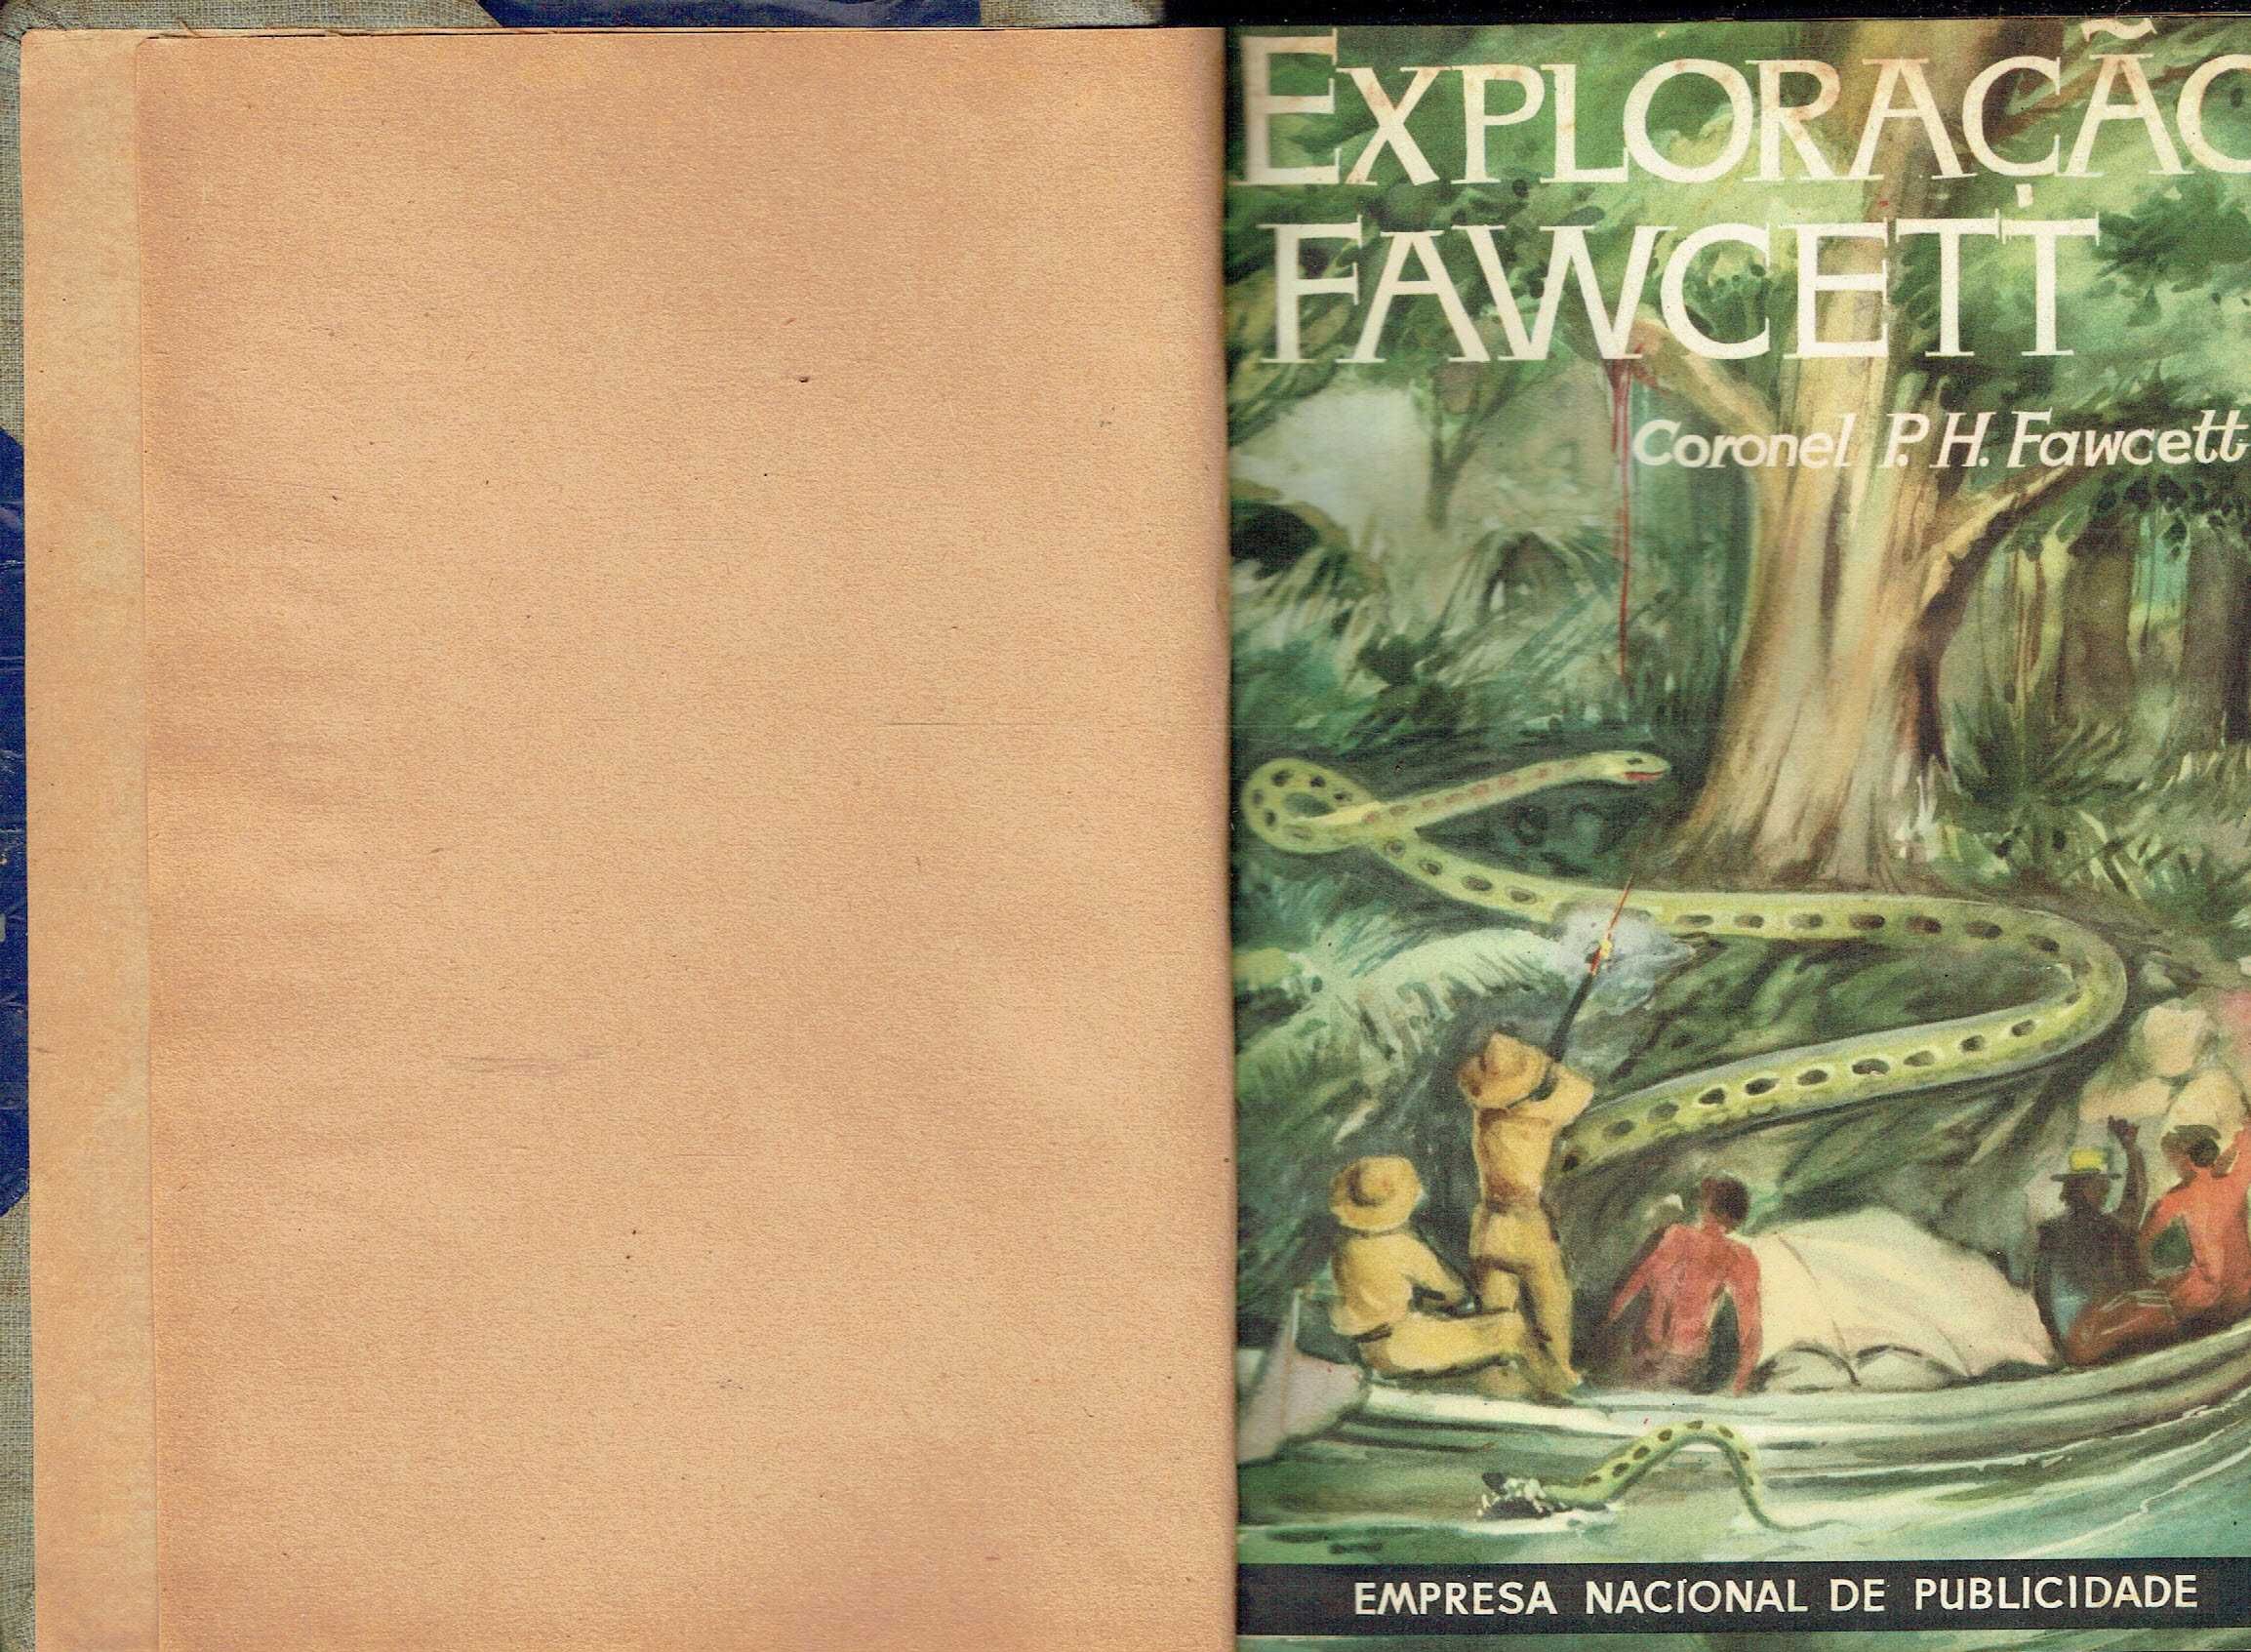 14255

Exploração Fawcett  
de Percy Harrison Fawcett